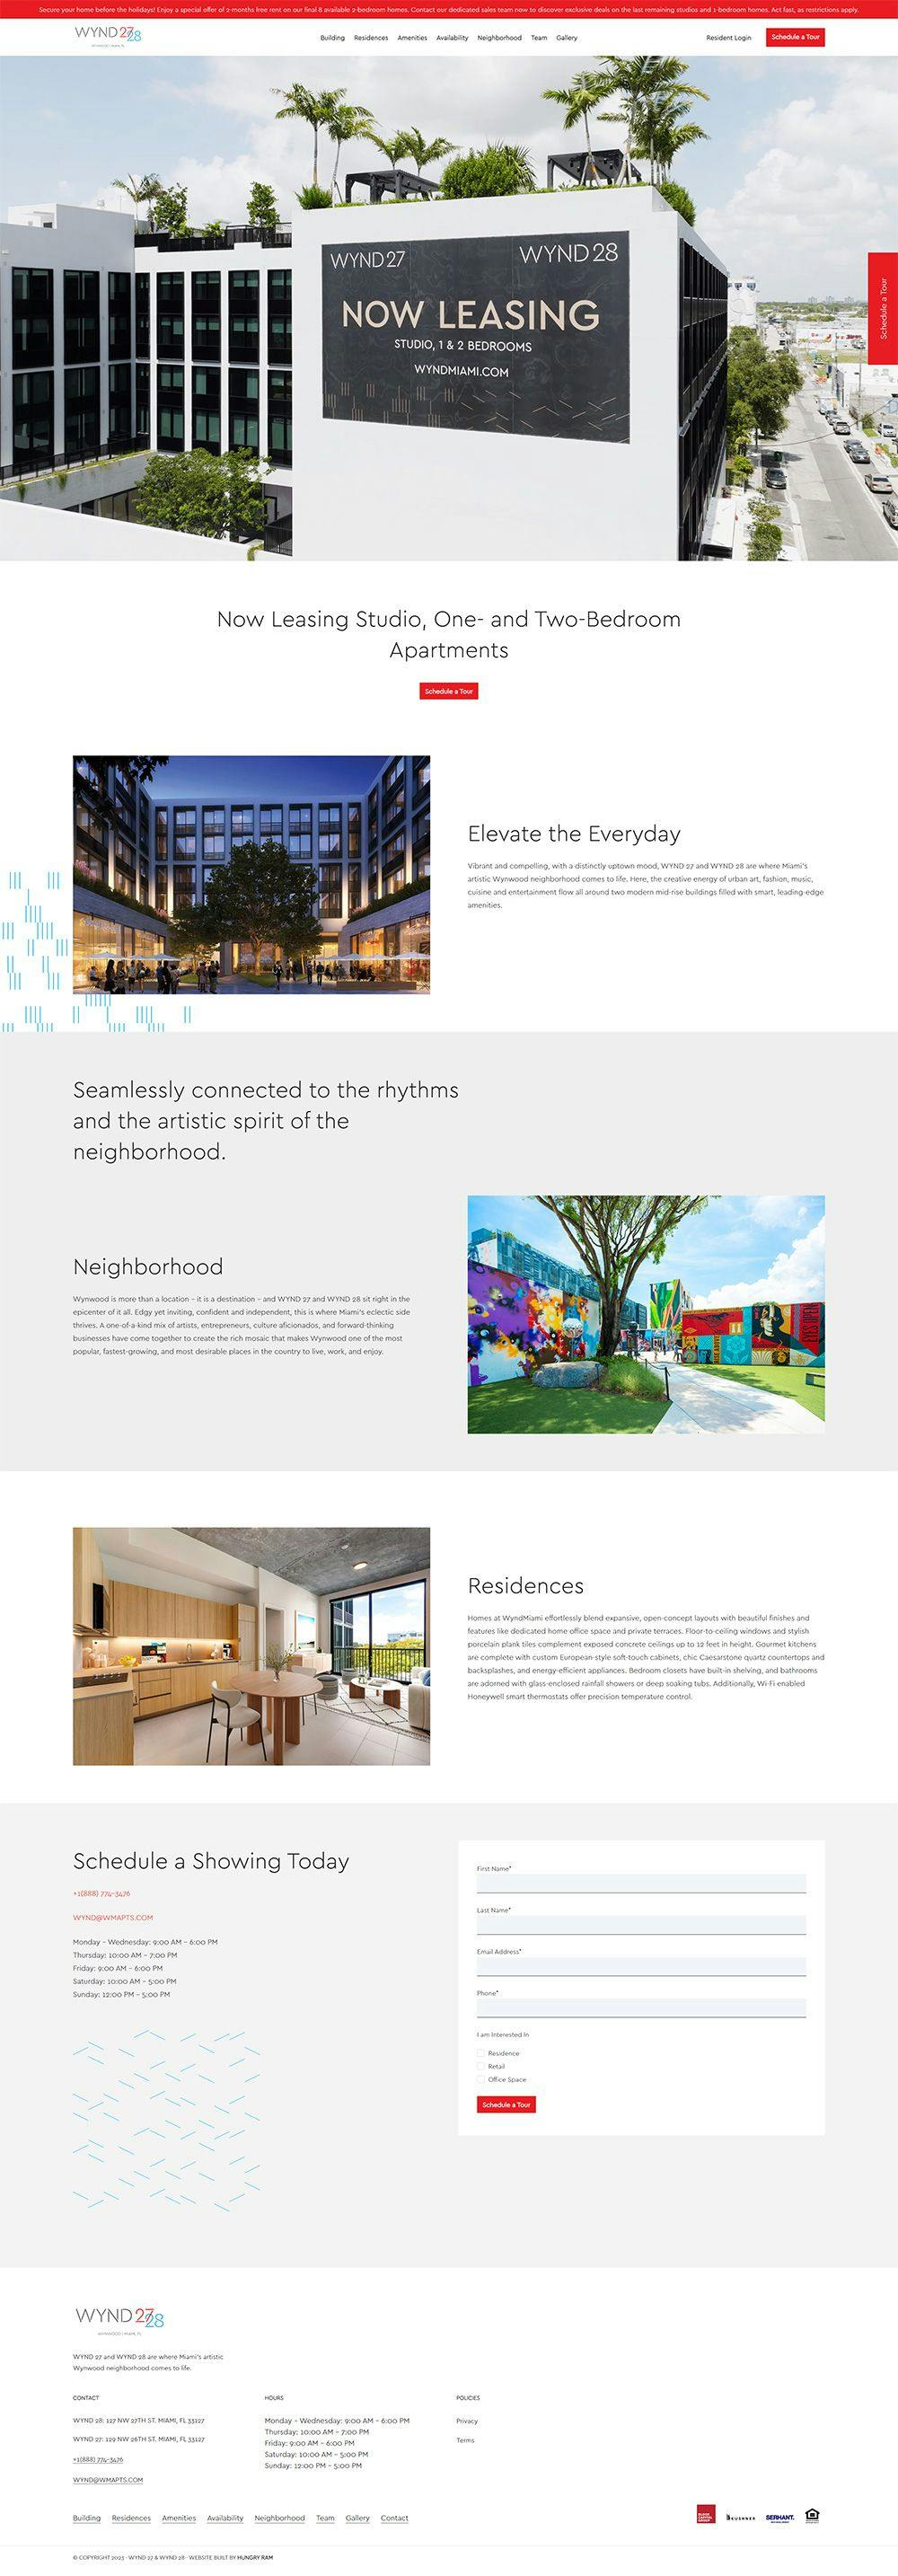 Wynd Miami website design amenities page